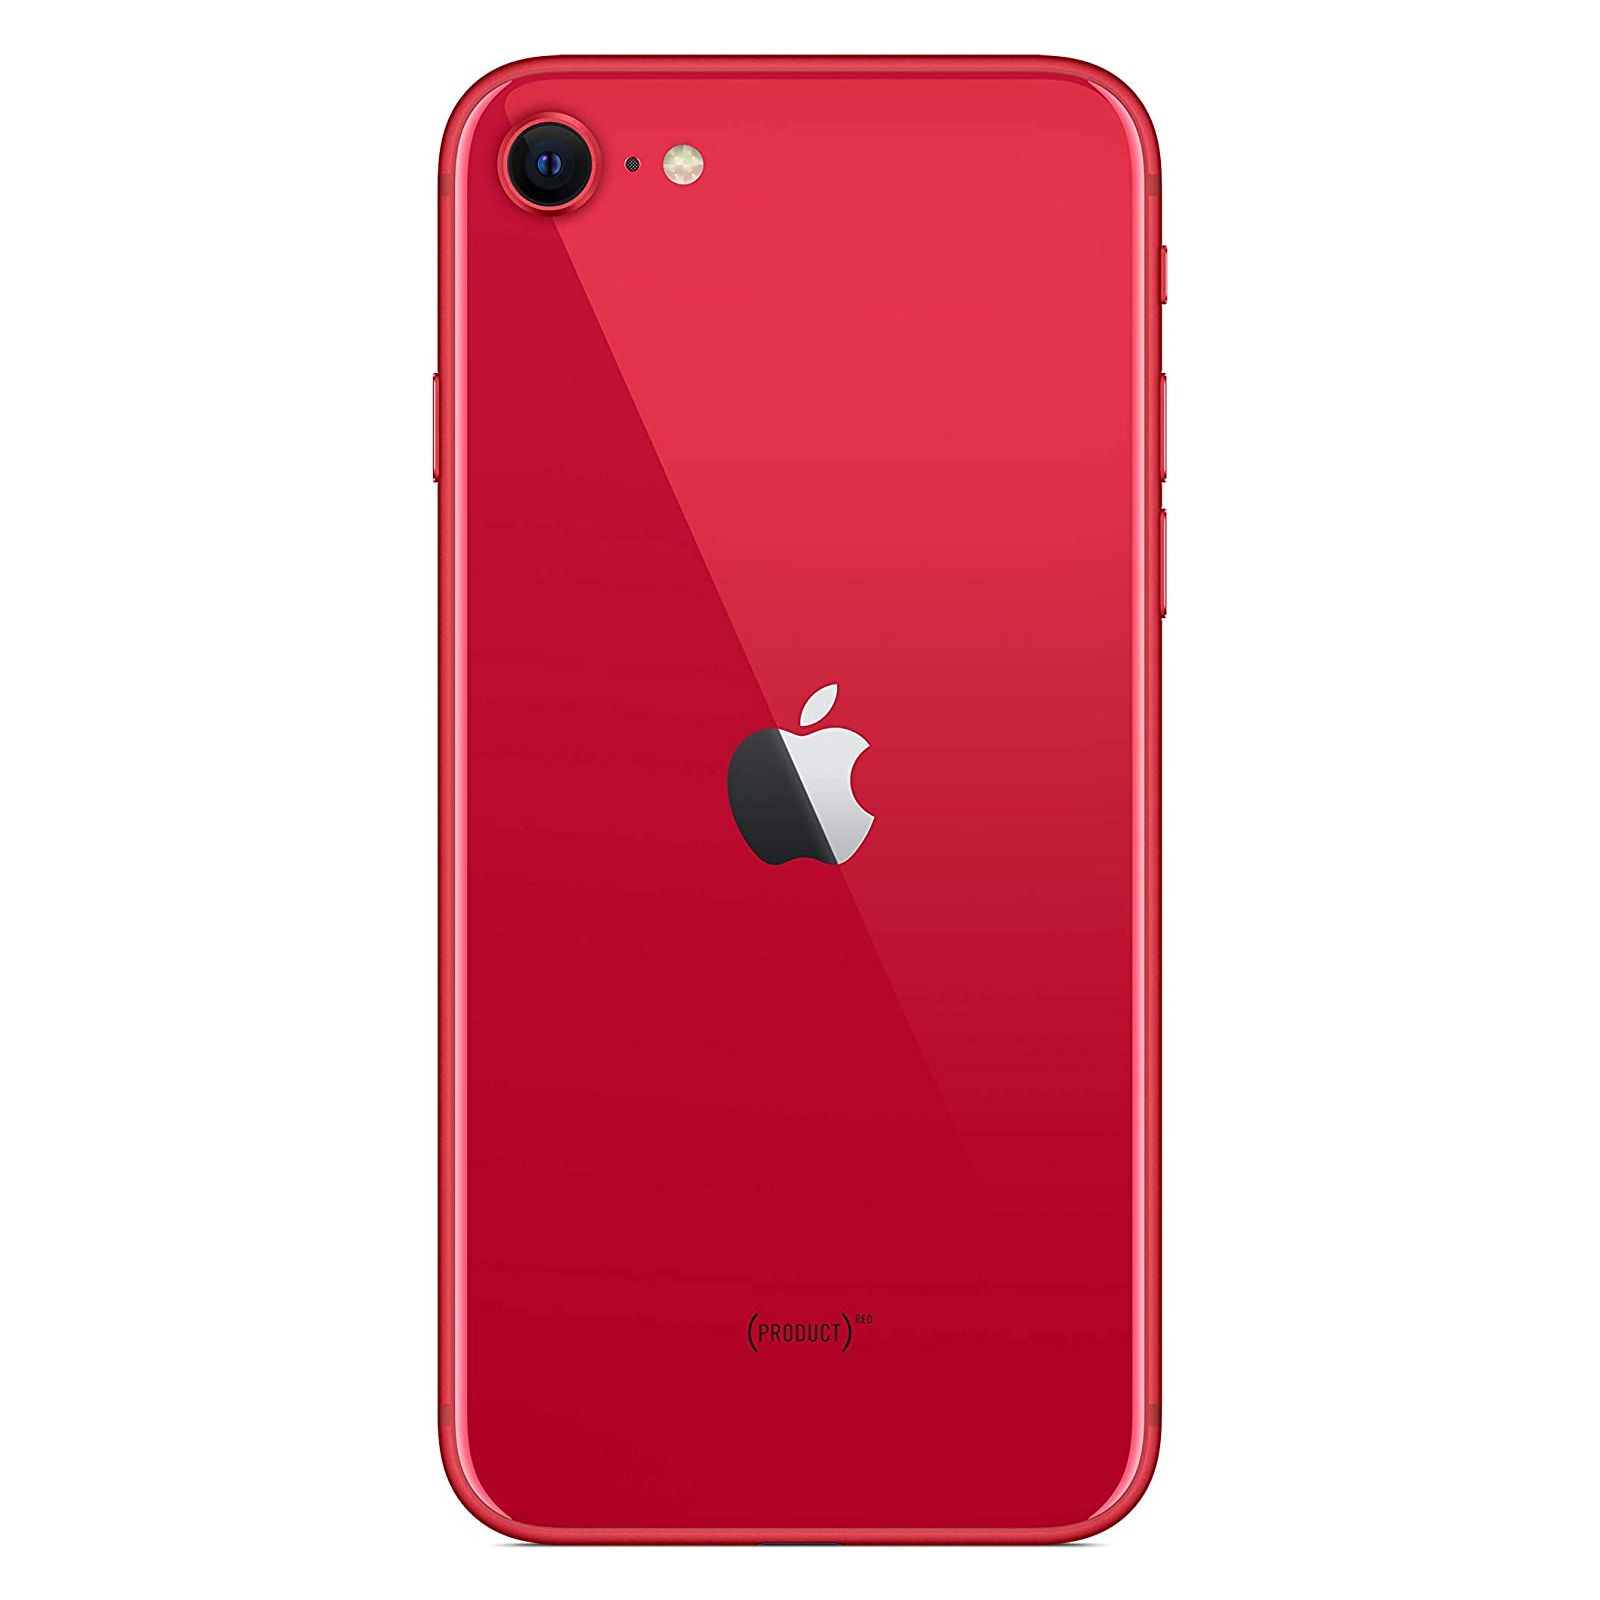 Smartphone Apple iPhone SE (2020) 128GB rosso